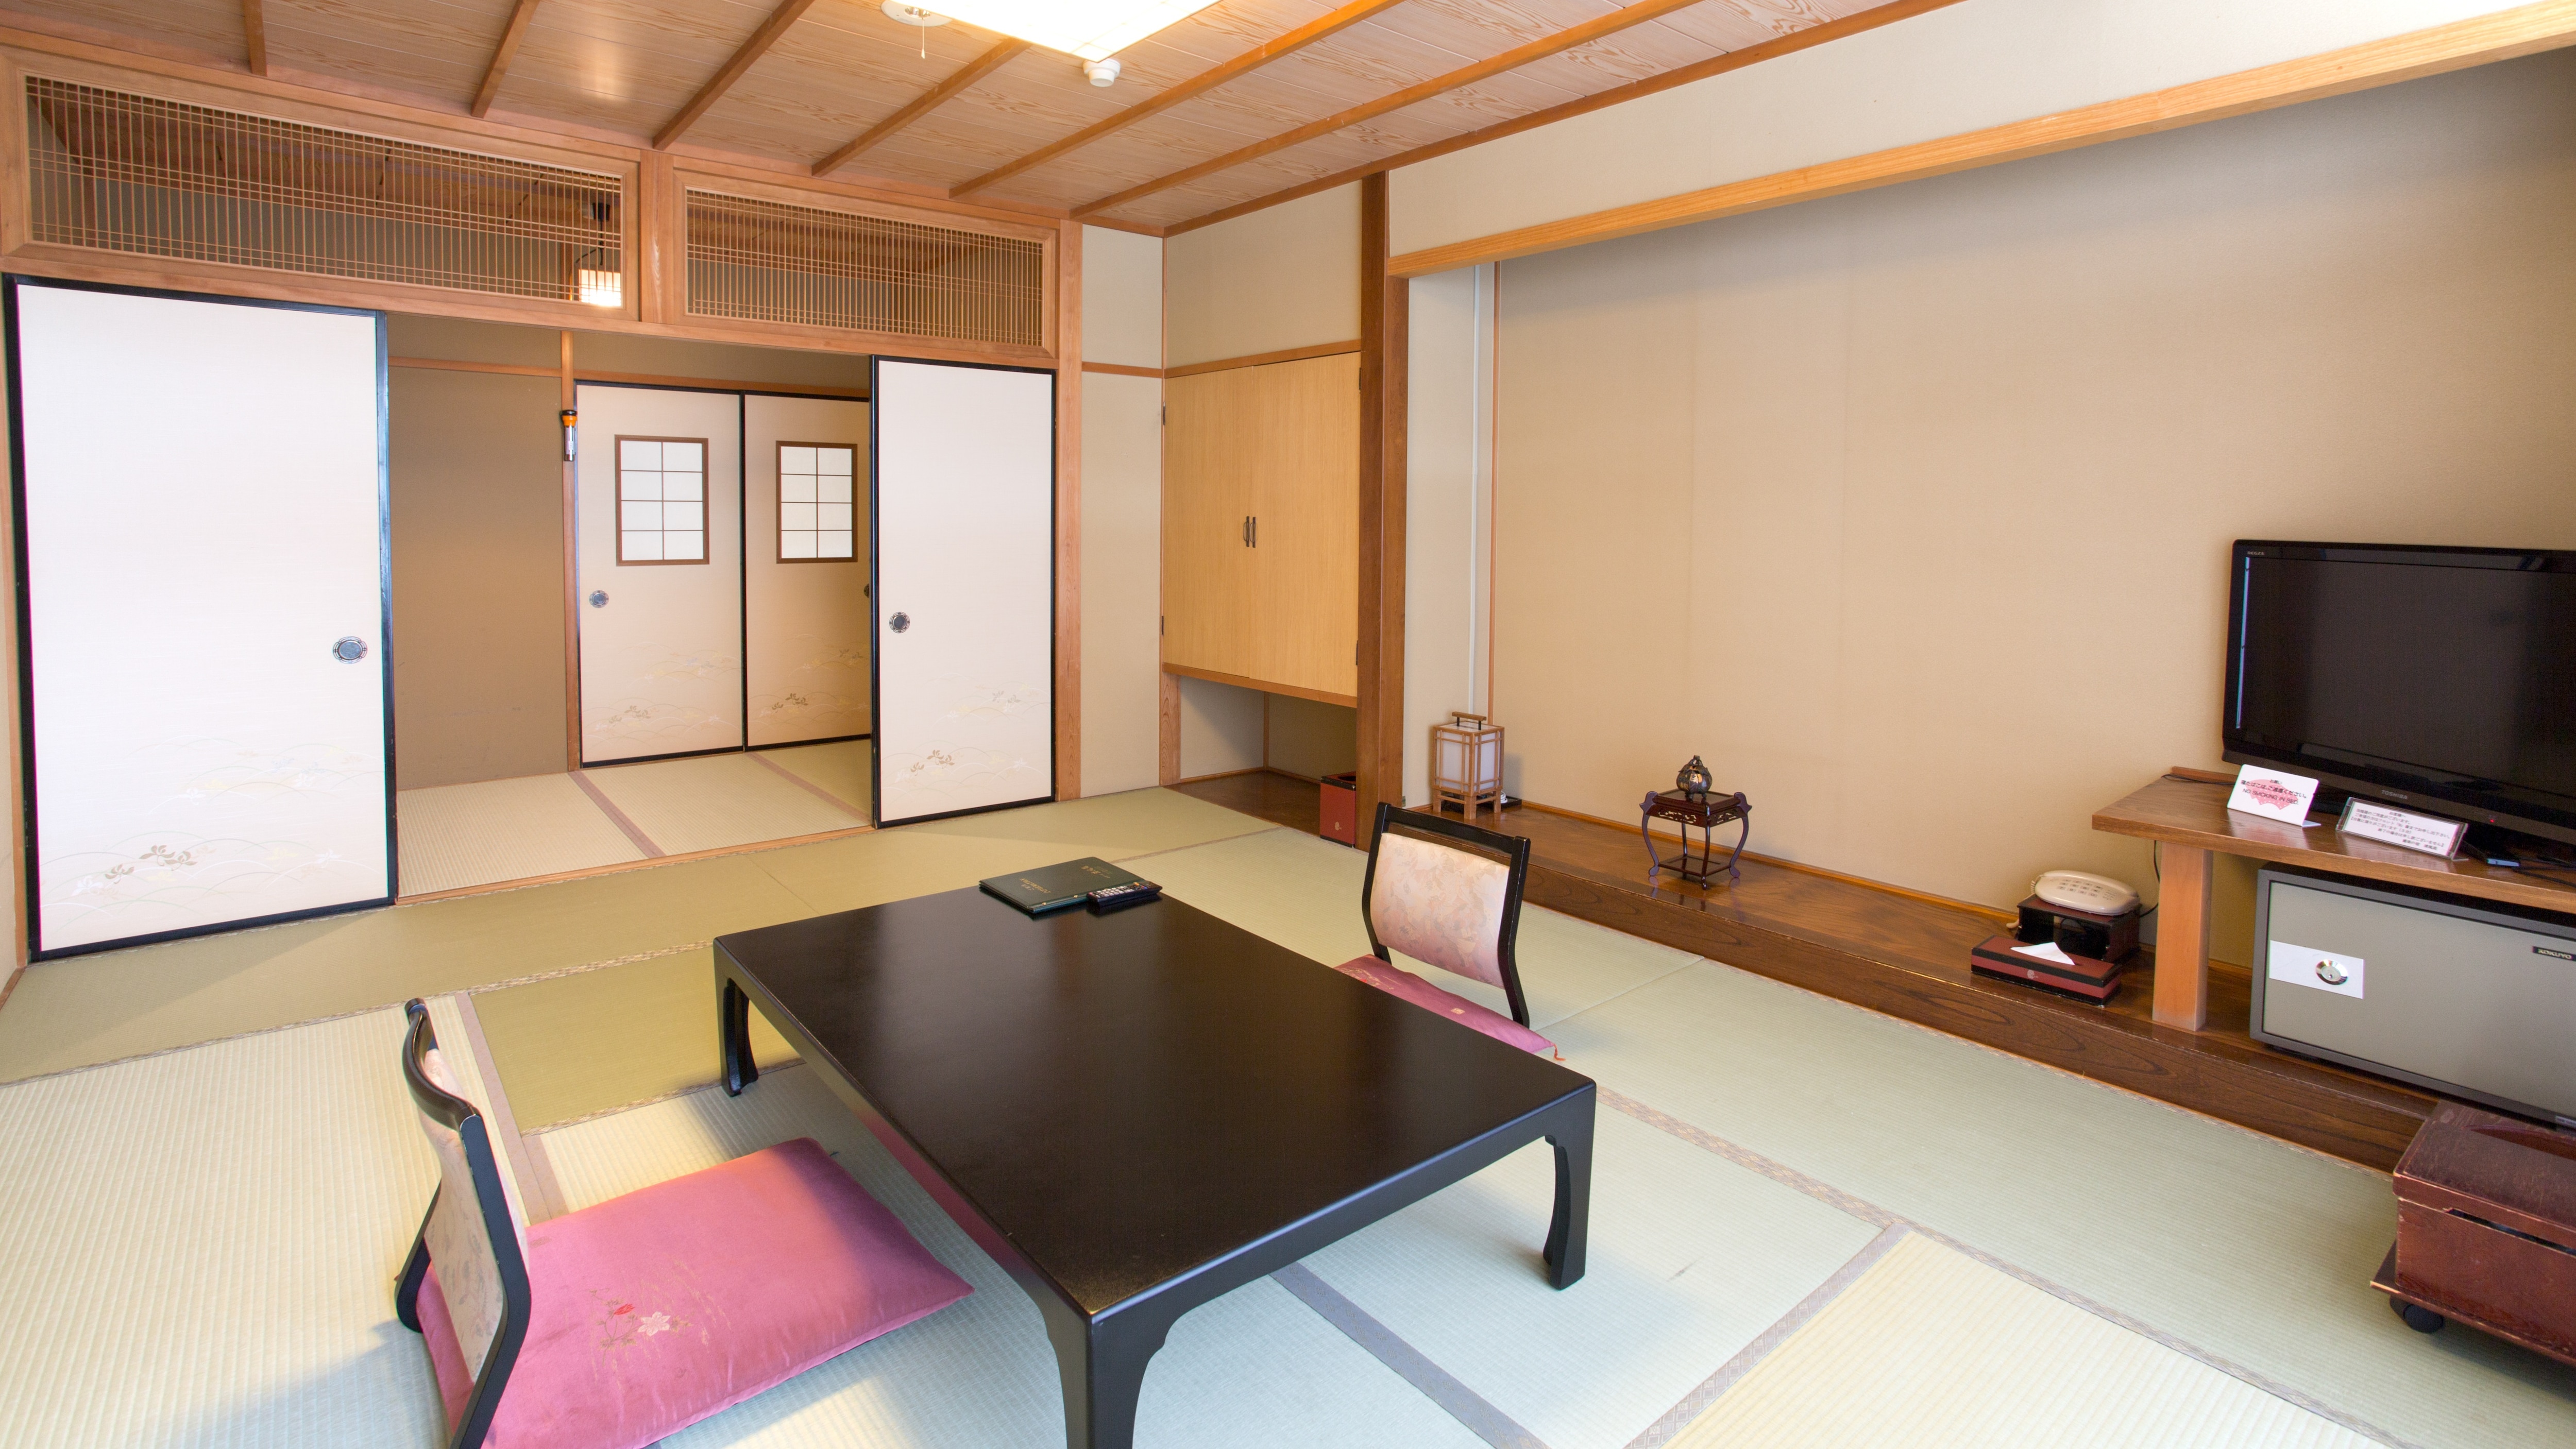 Main building Japanese-style room 10 tatami mats